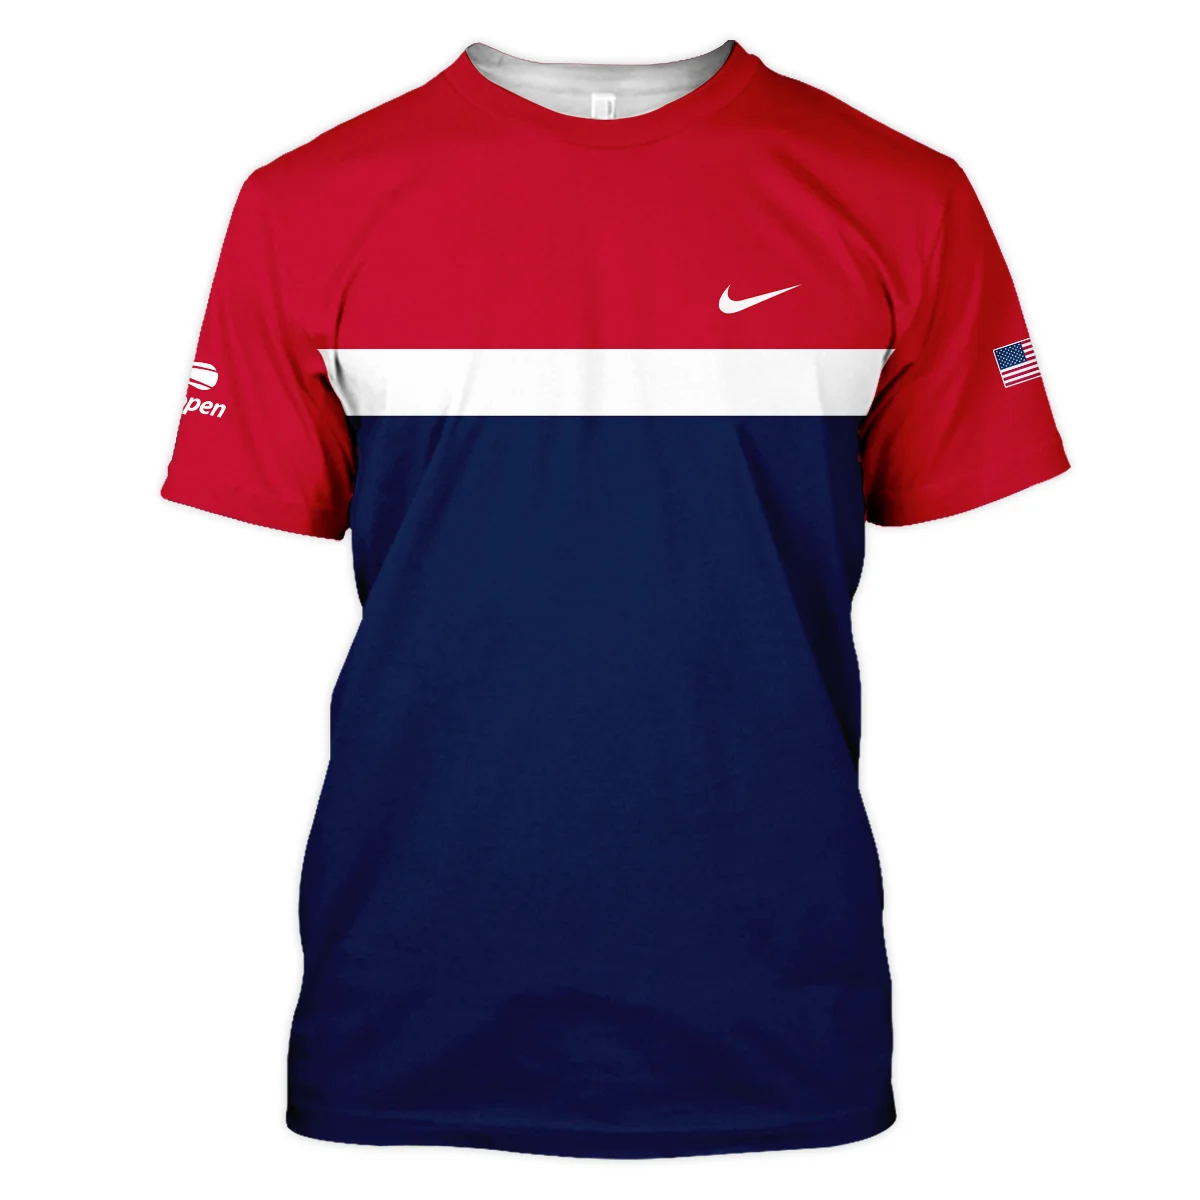 Nike Blue Red White Background US Open Tennis Champions Zipper Hoodie Shirt Style Classic Zipper Hoodie Shirt